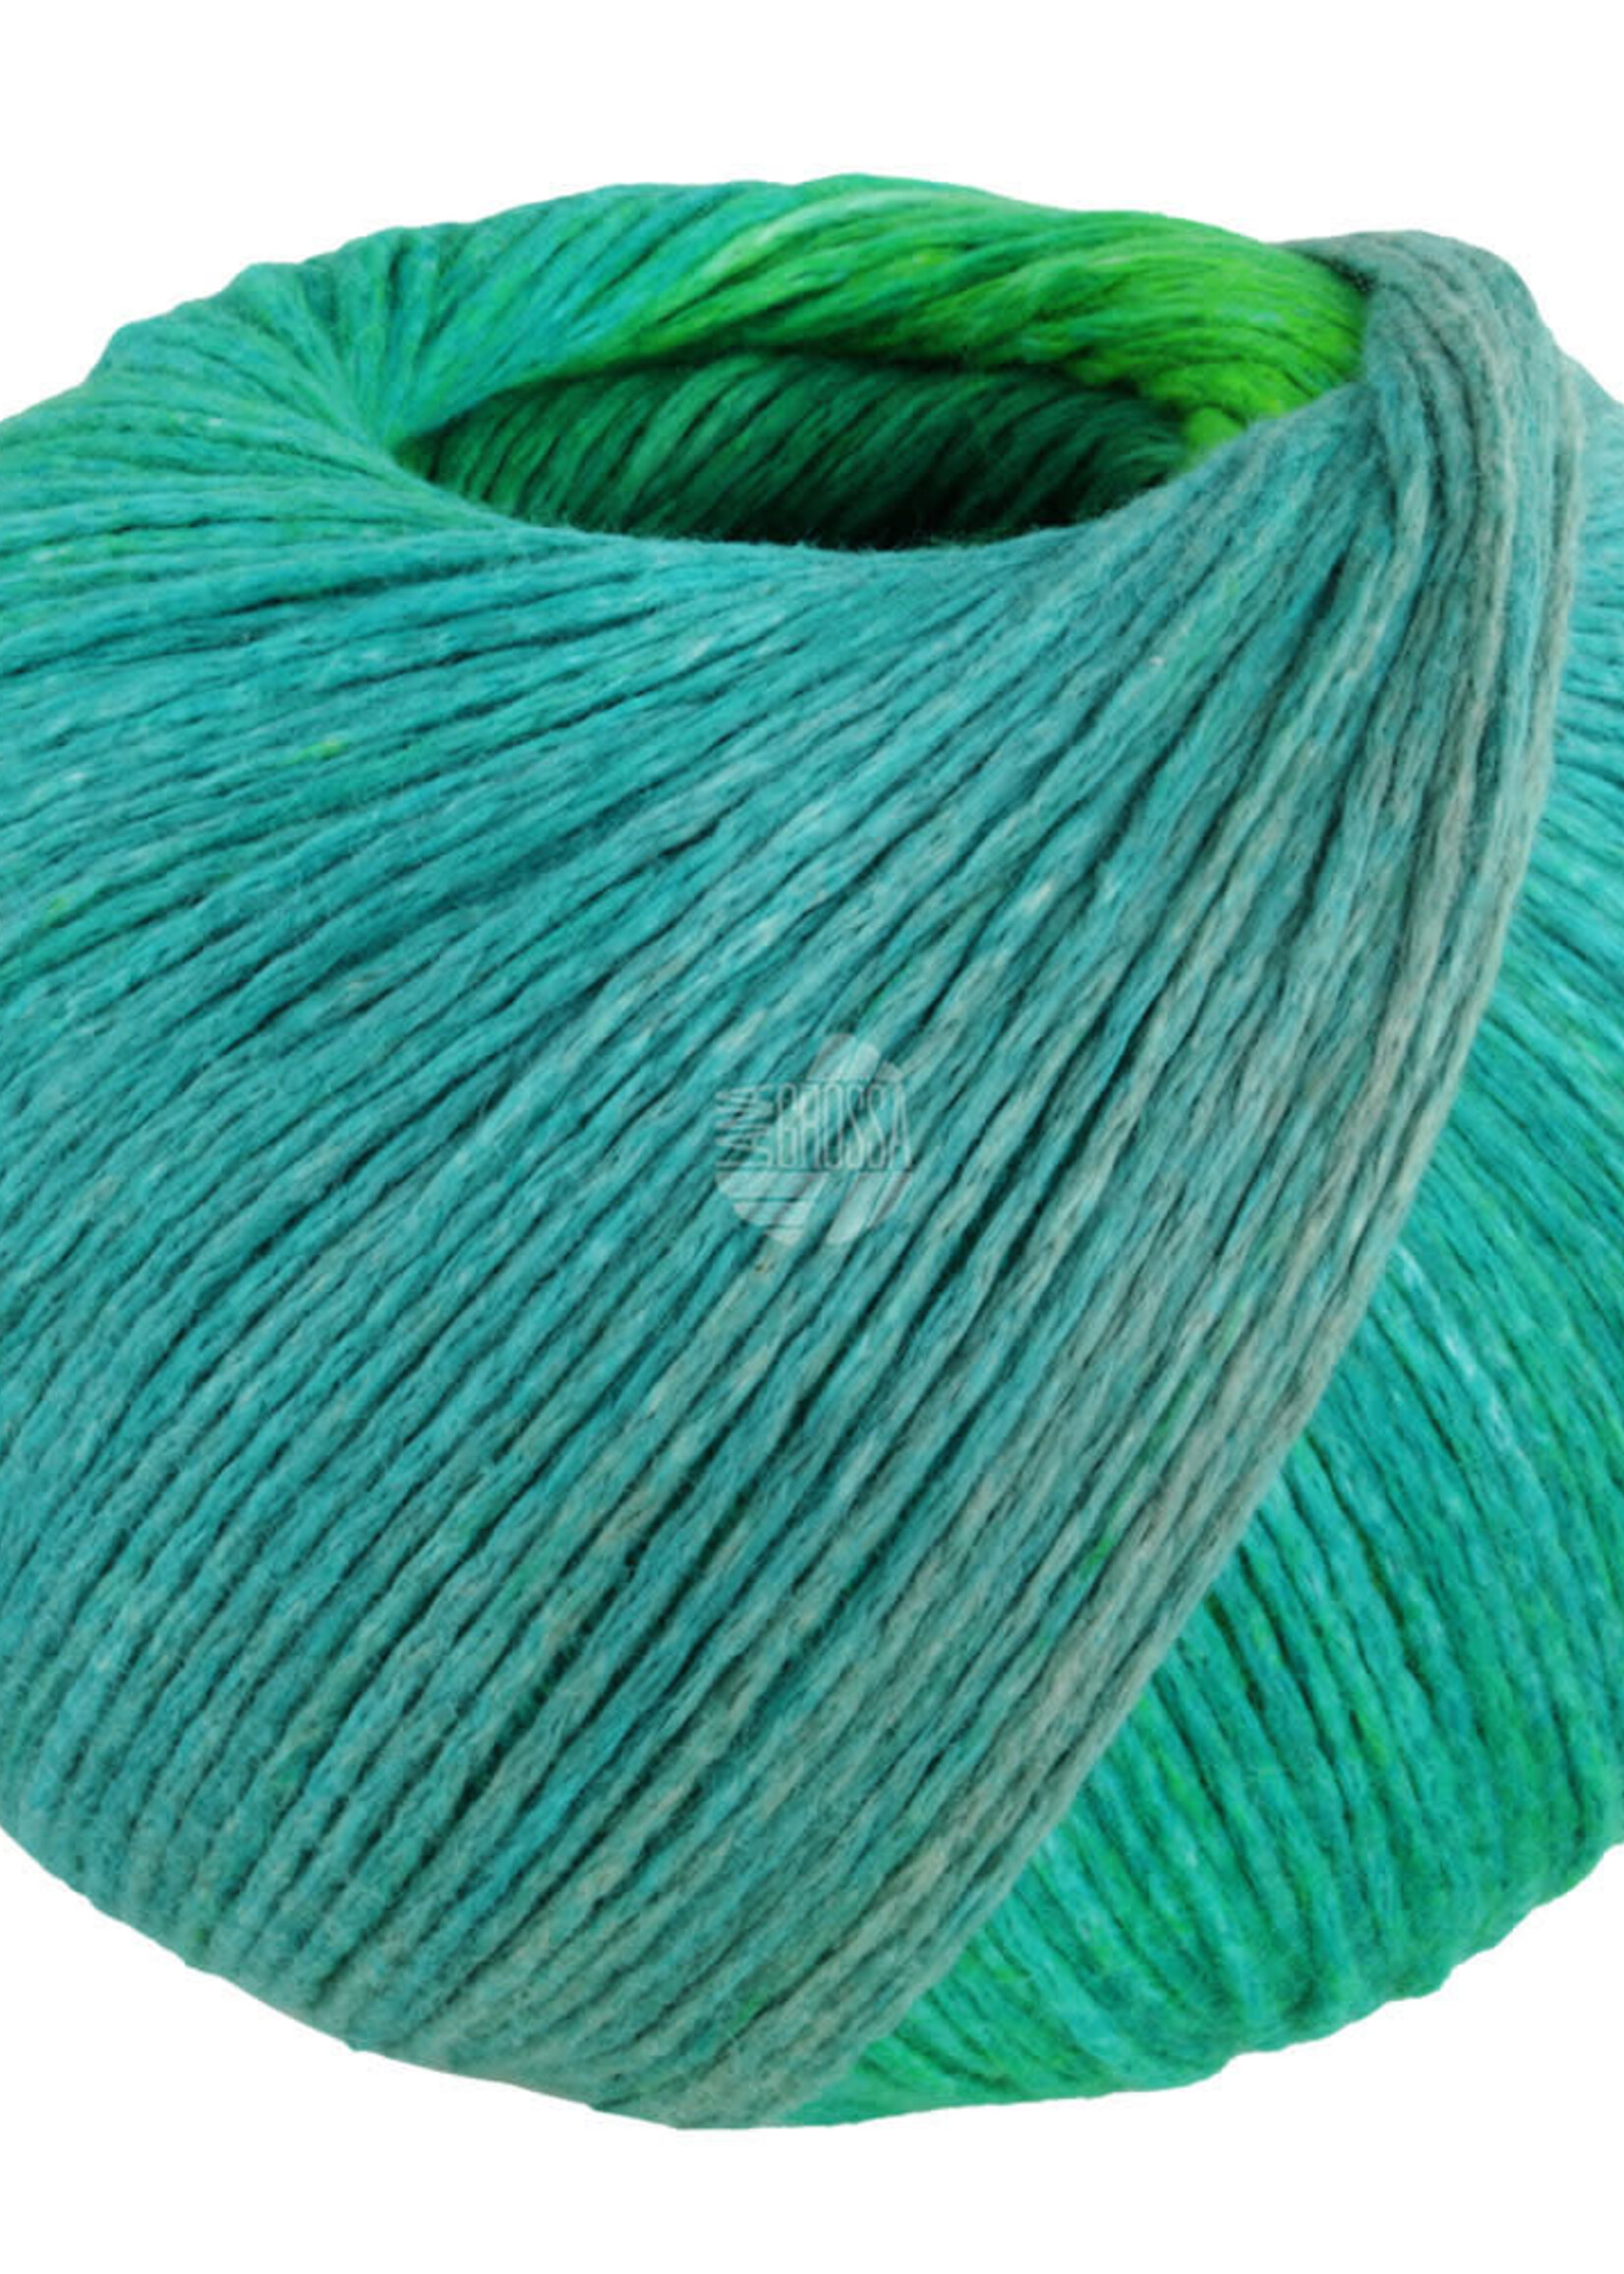 Lana Grossa Cotonella - Lana Grossa -09 Turquoise/mintgrijs/maigroen/curry/oker/gras/turquoise/lichtgroen